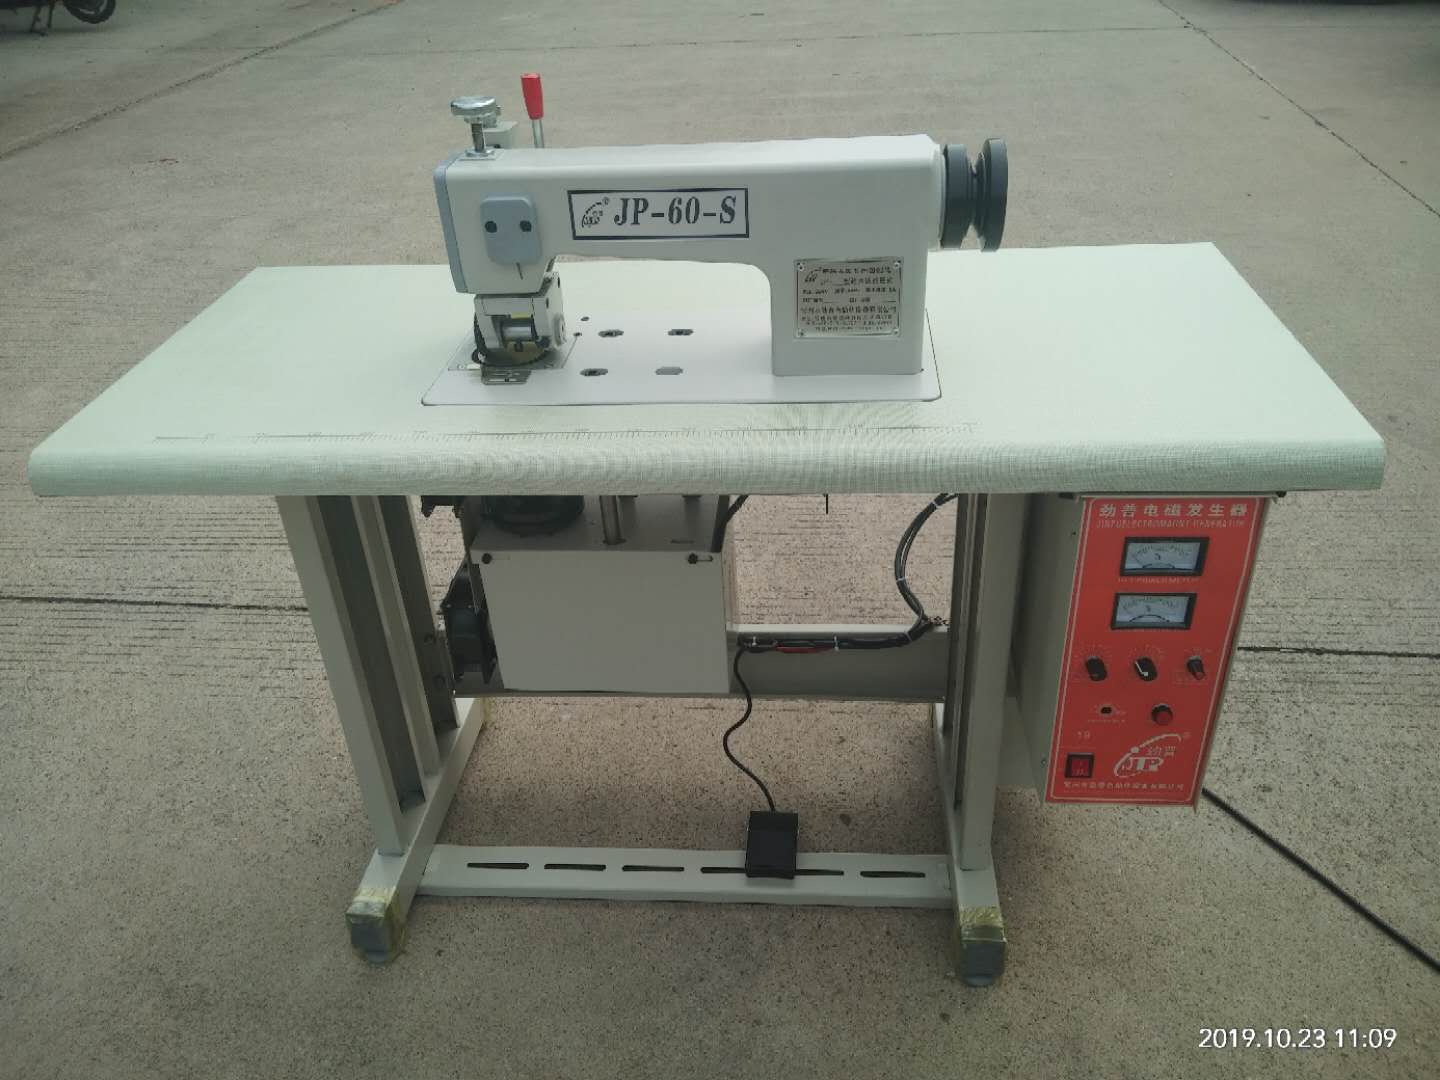 Low price industrial sewing machine ultrasonic woven bag sealing machine JP-60-S